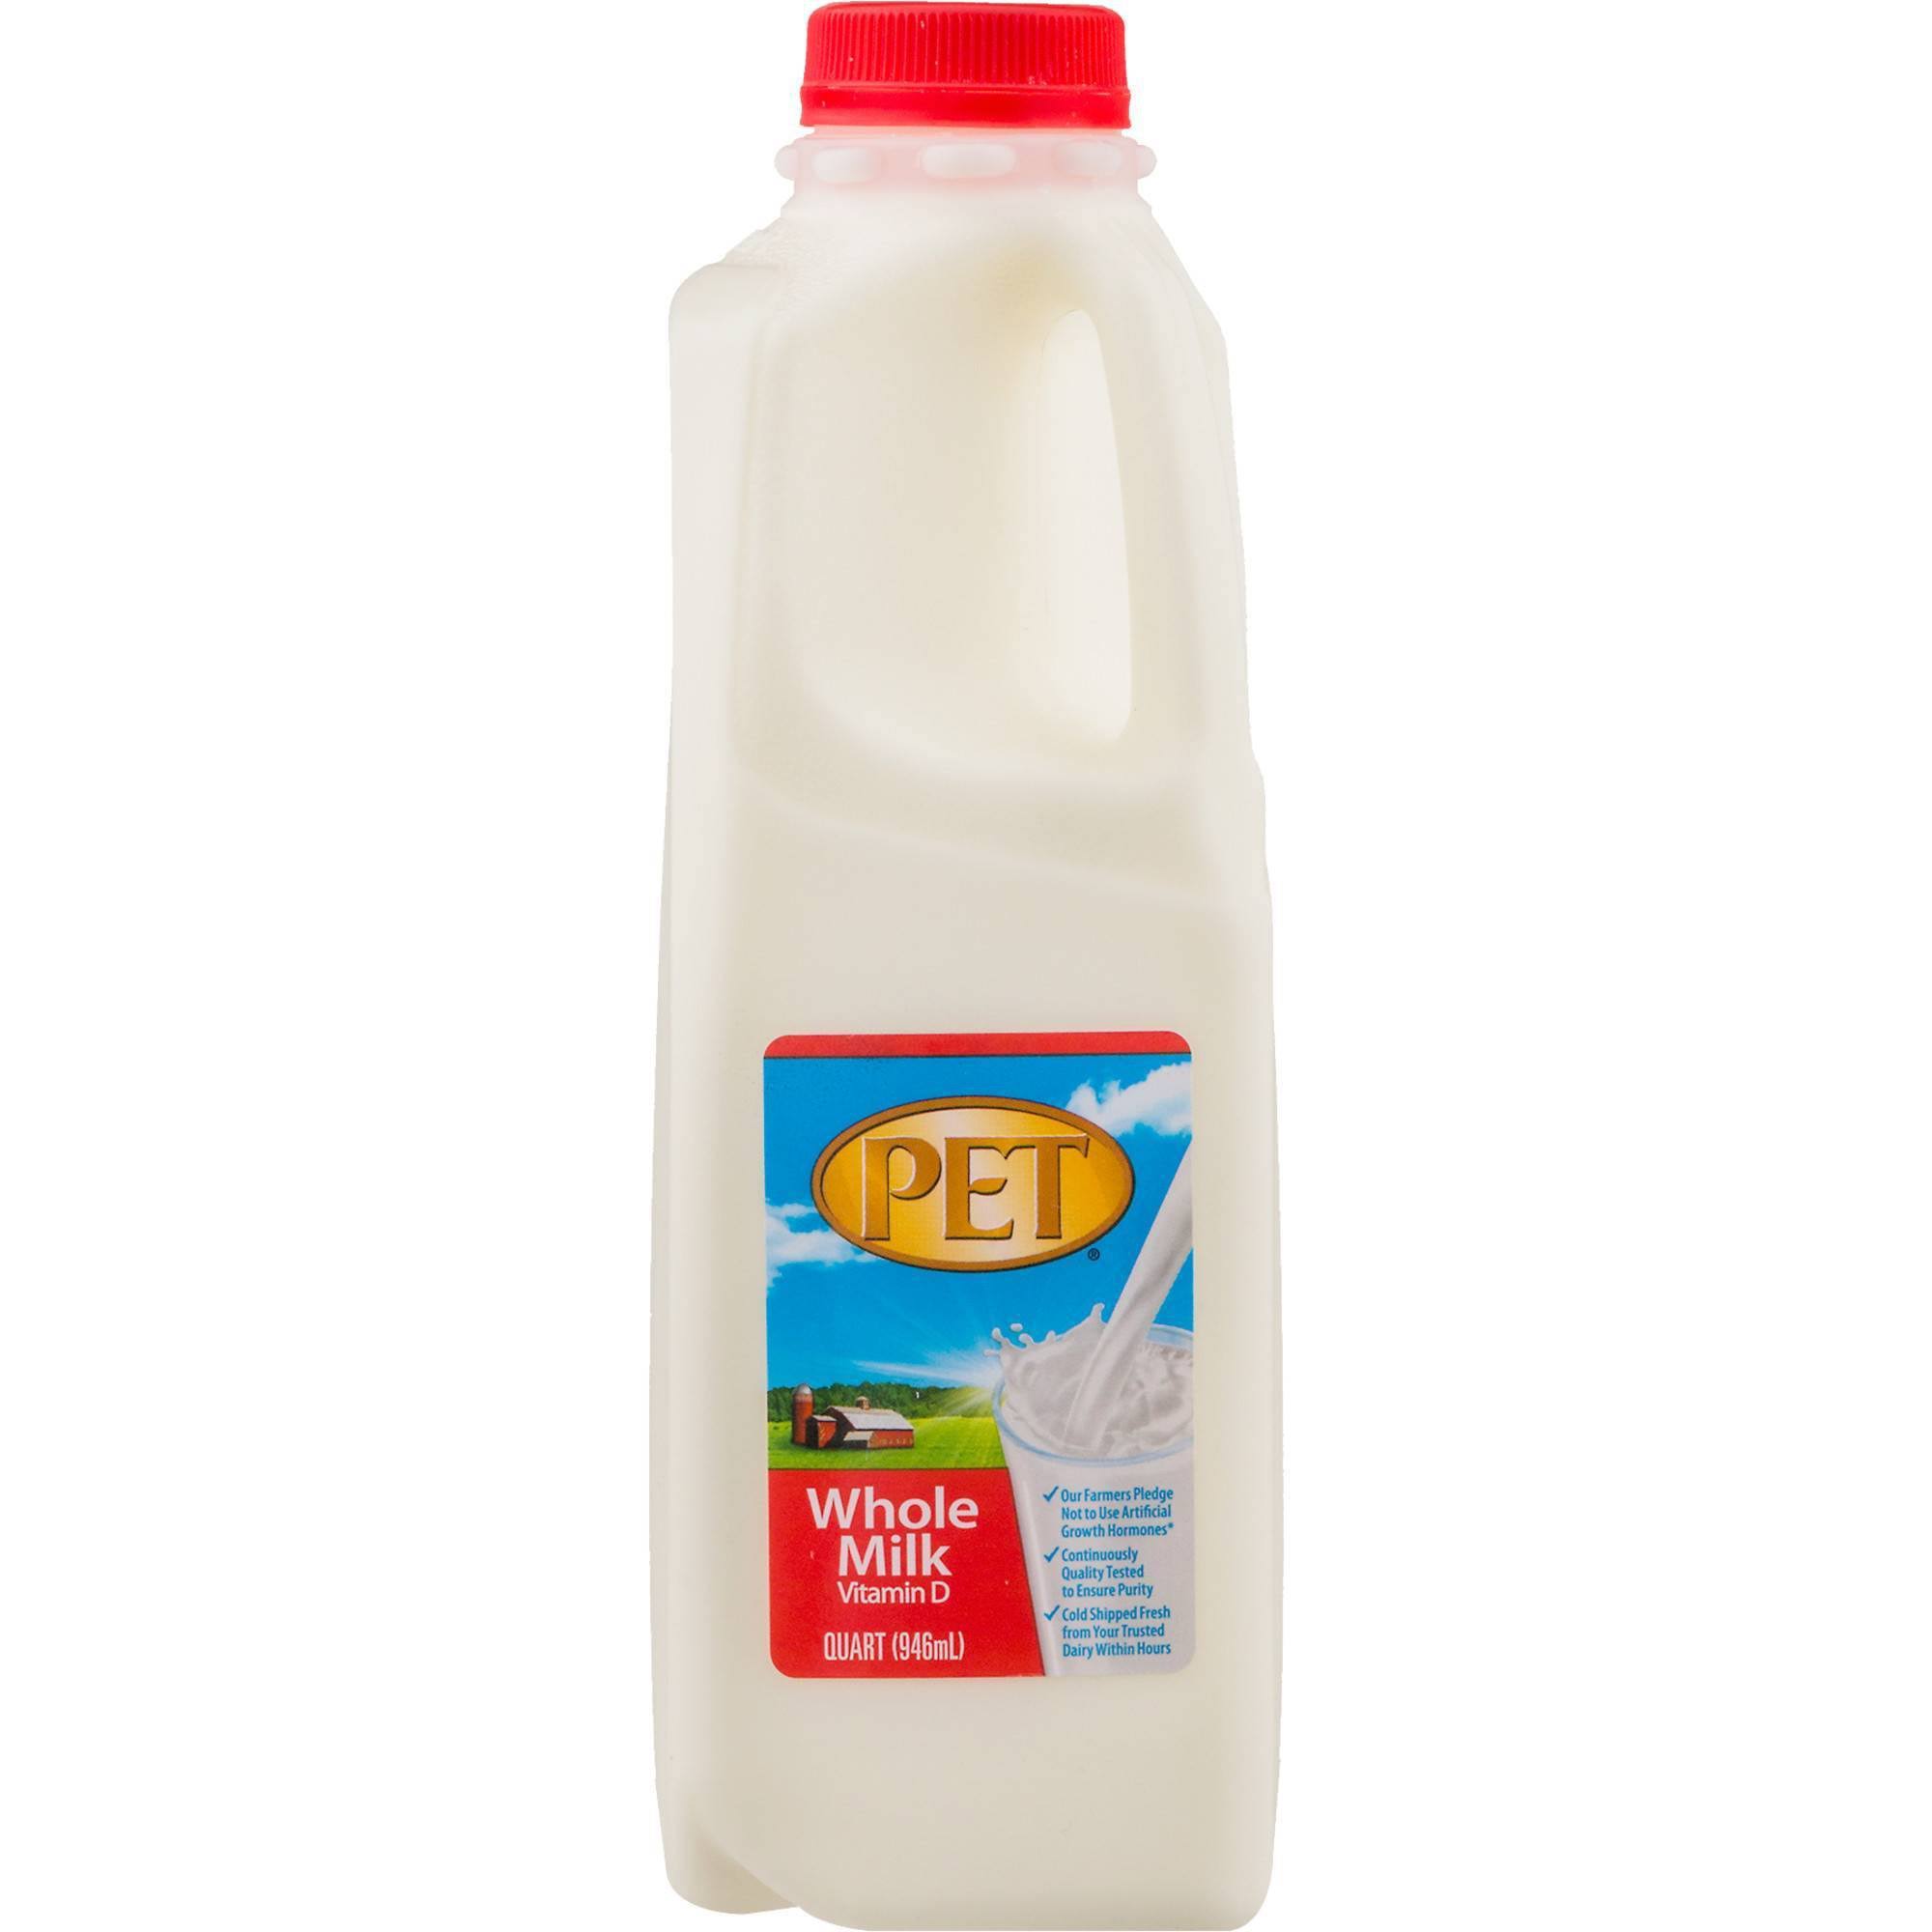 Pet Whole Milk - quart (946 ml)